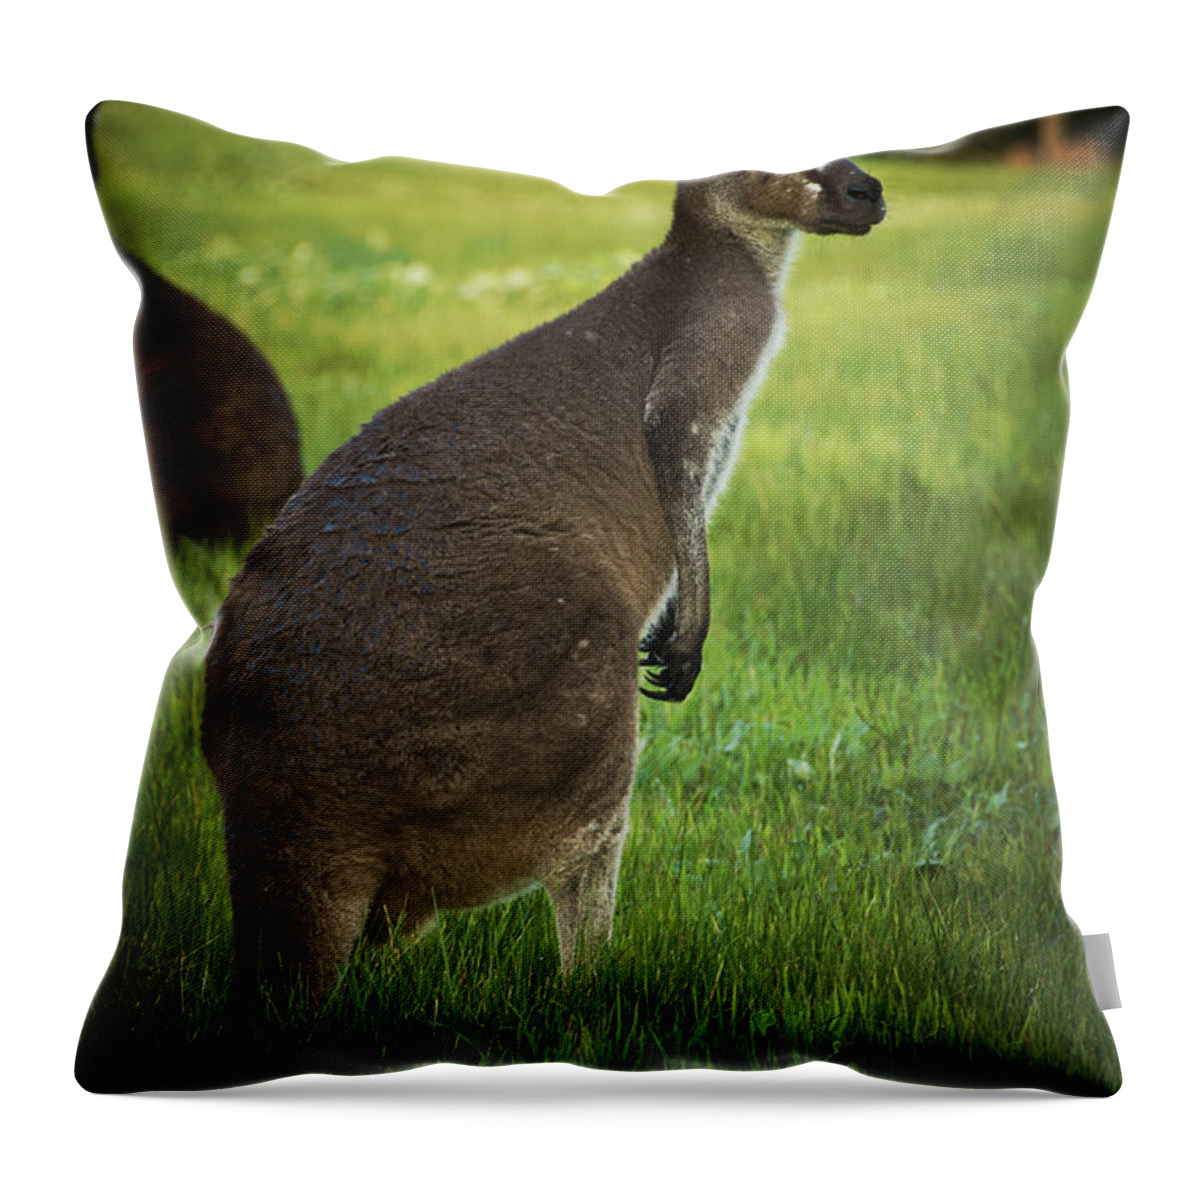 Kangaroo Throw Pillow featuring the photograph Australian Kangaroo by Phill Petrovic